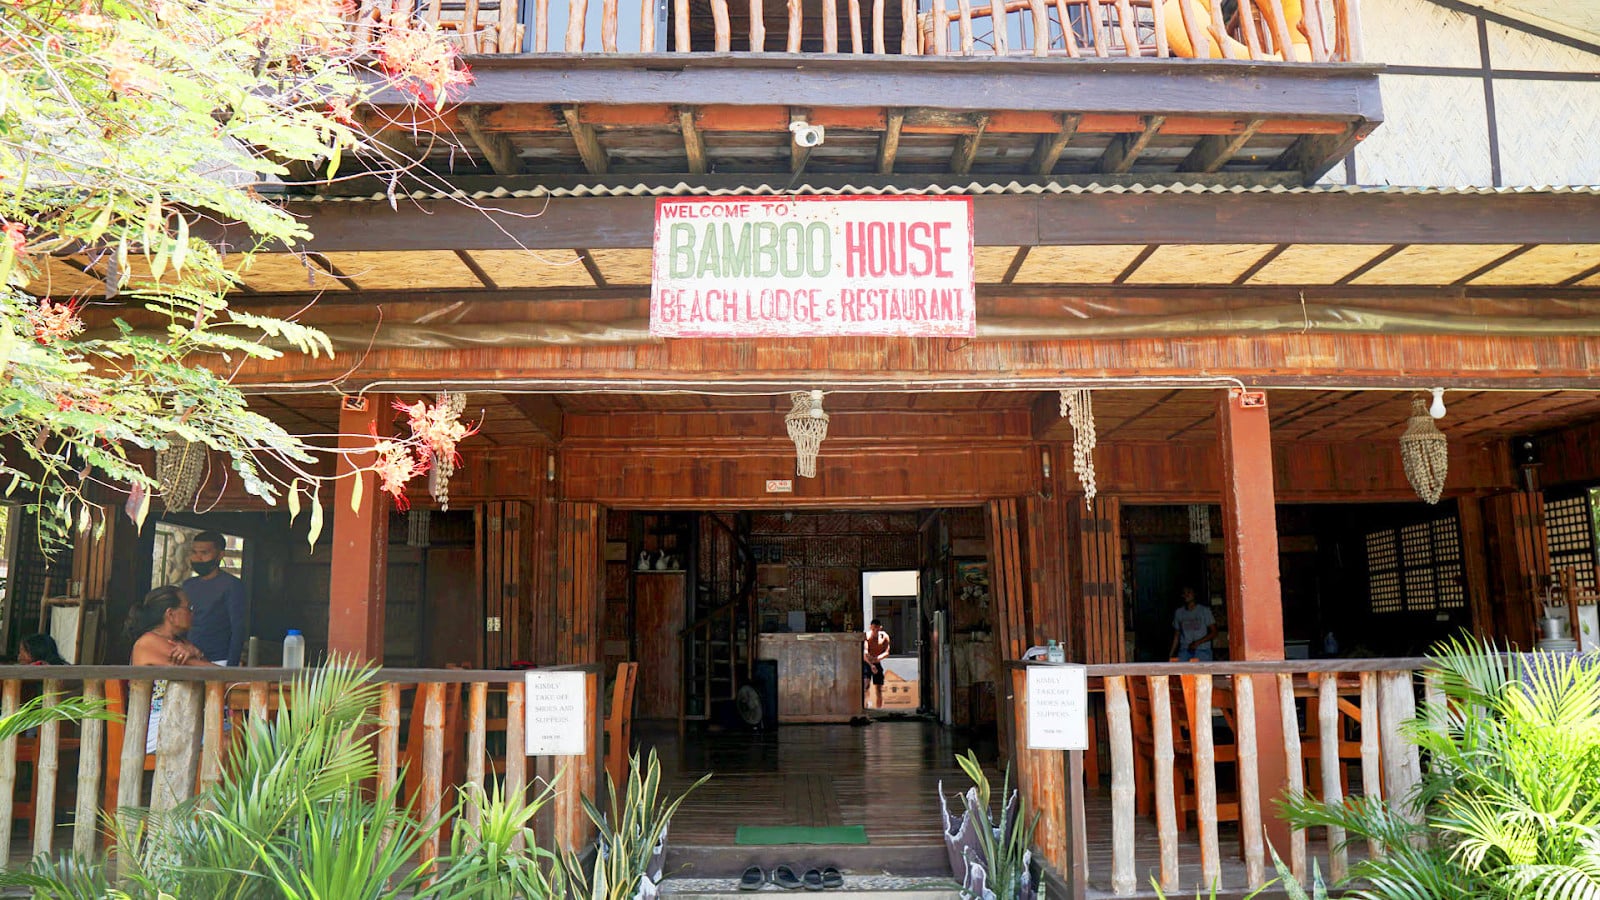 Entrance of the Bamboo Beach House Restaurant